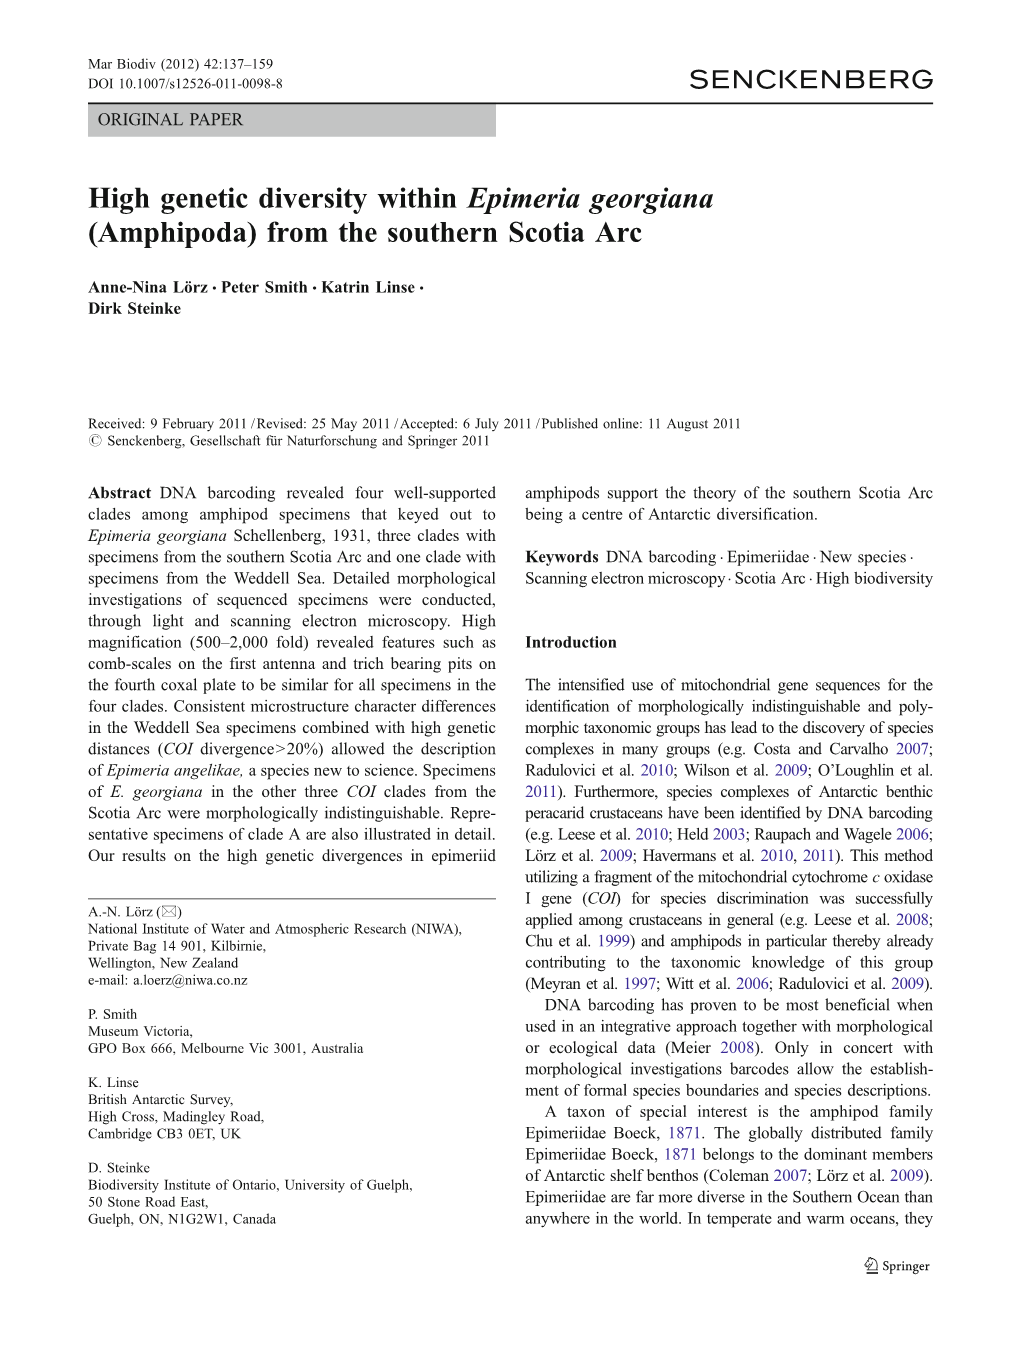 High Genetic Diversity Within Epimeria Georgiana (Amphipoda) from the Southern Scotia Arc